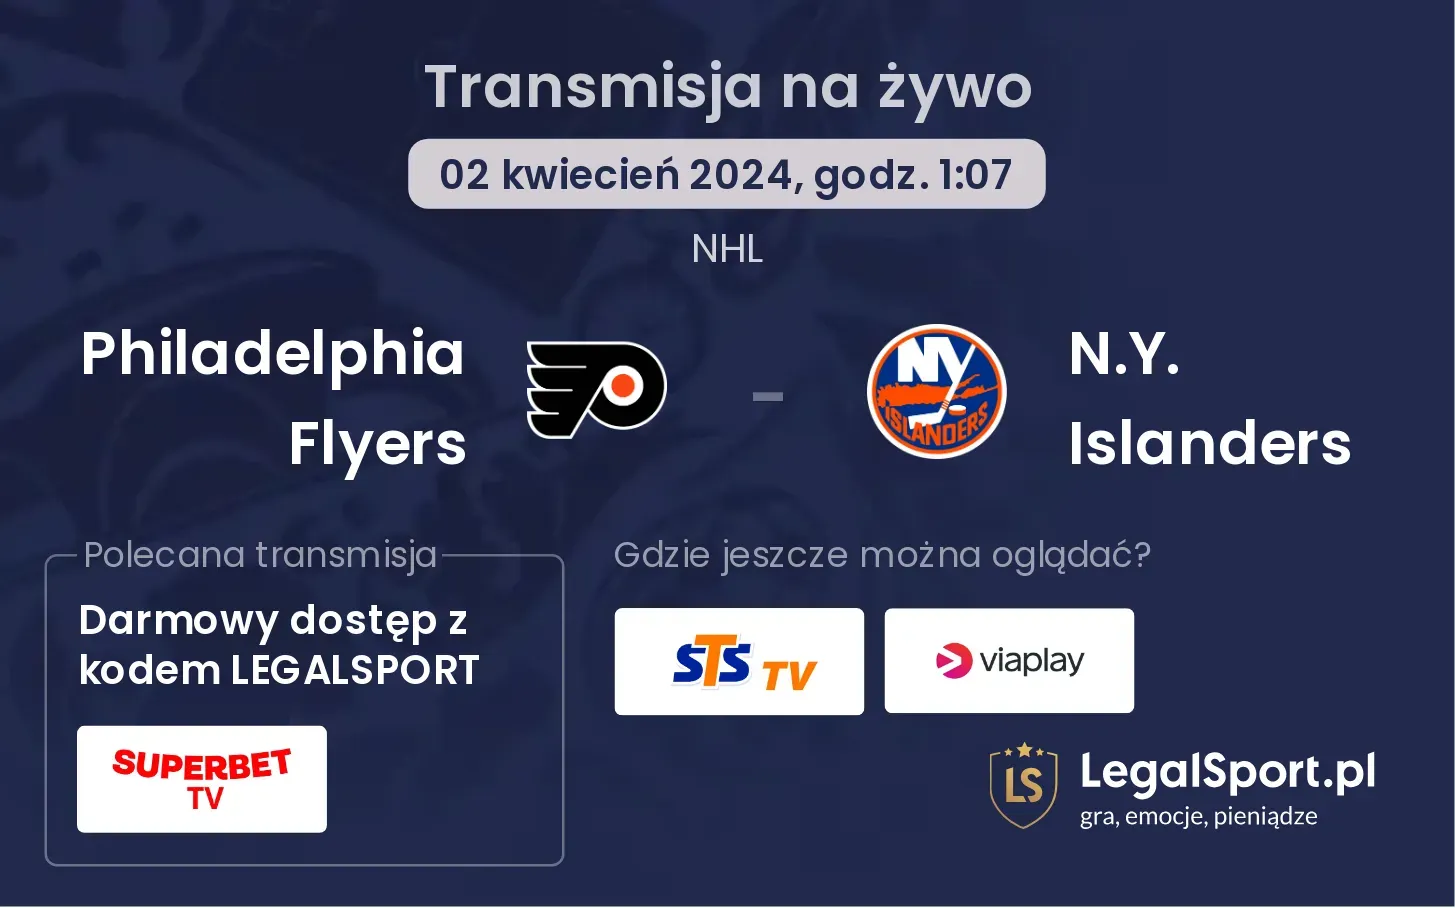 Philadelphia Flyers - N.Y. Islanders transmisja na żywo